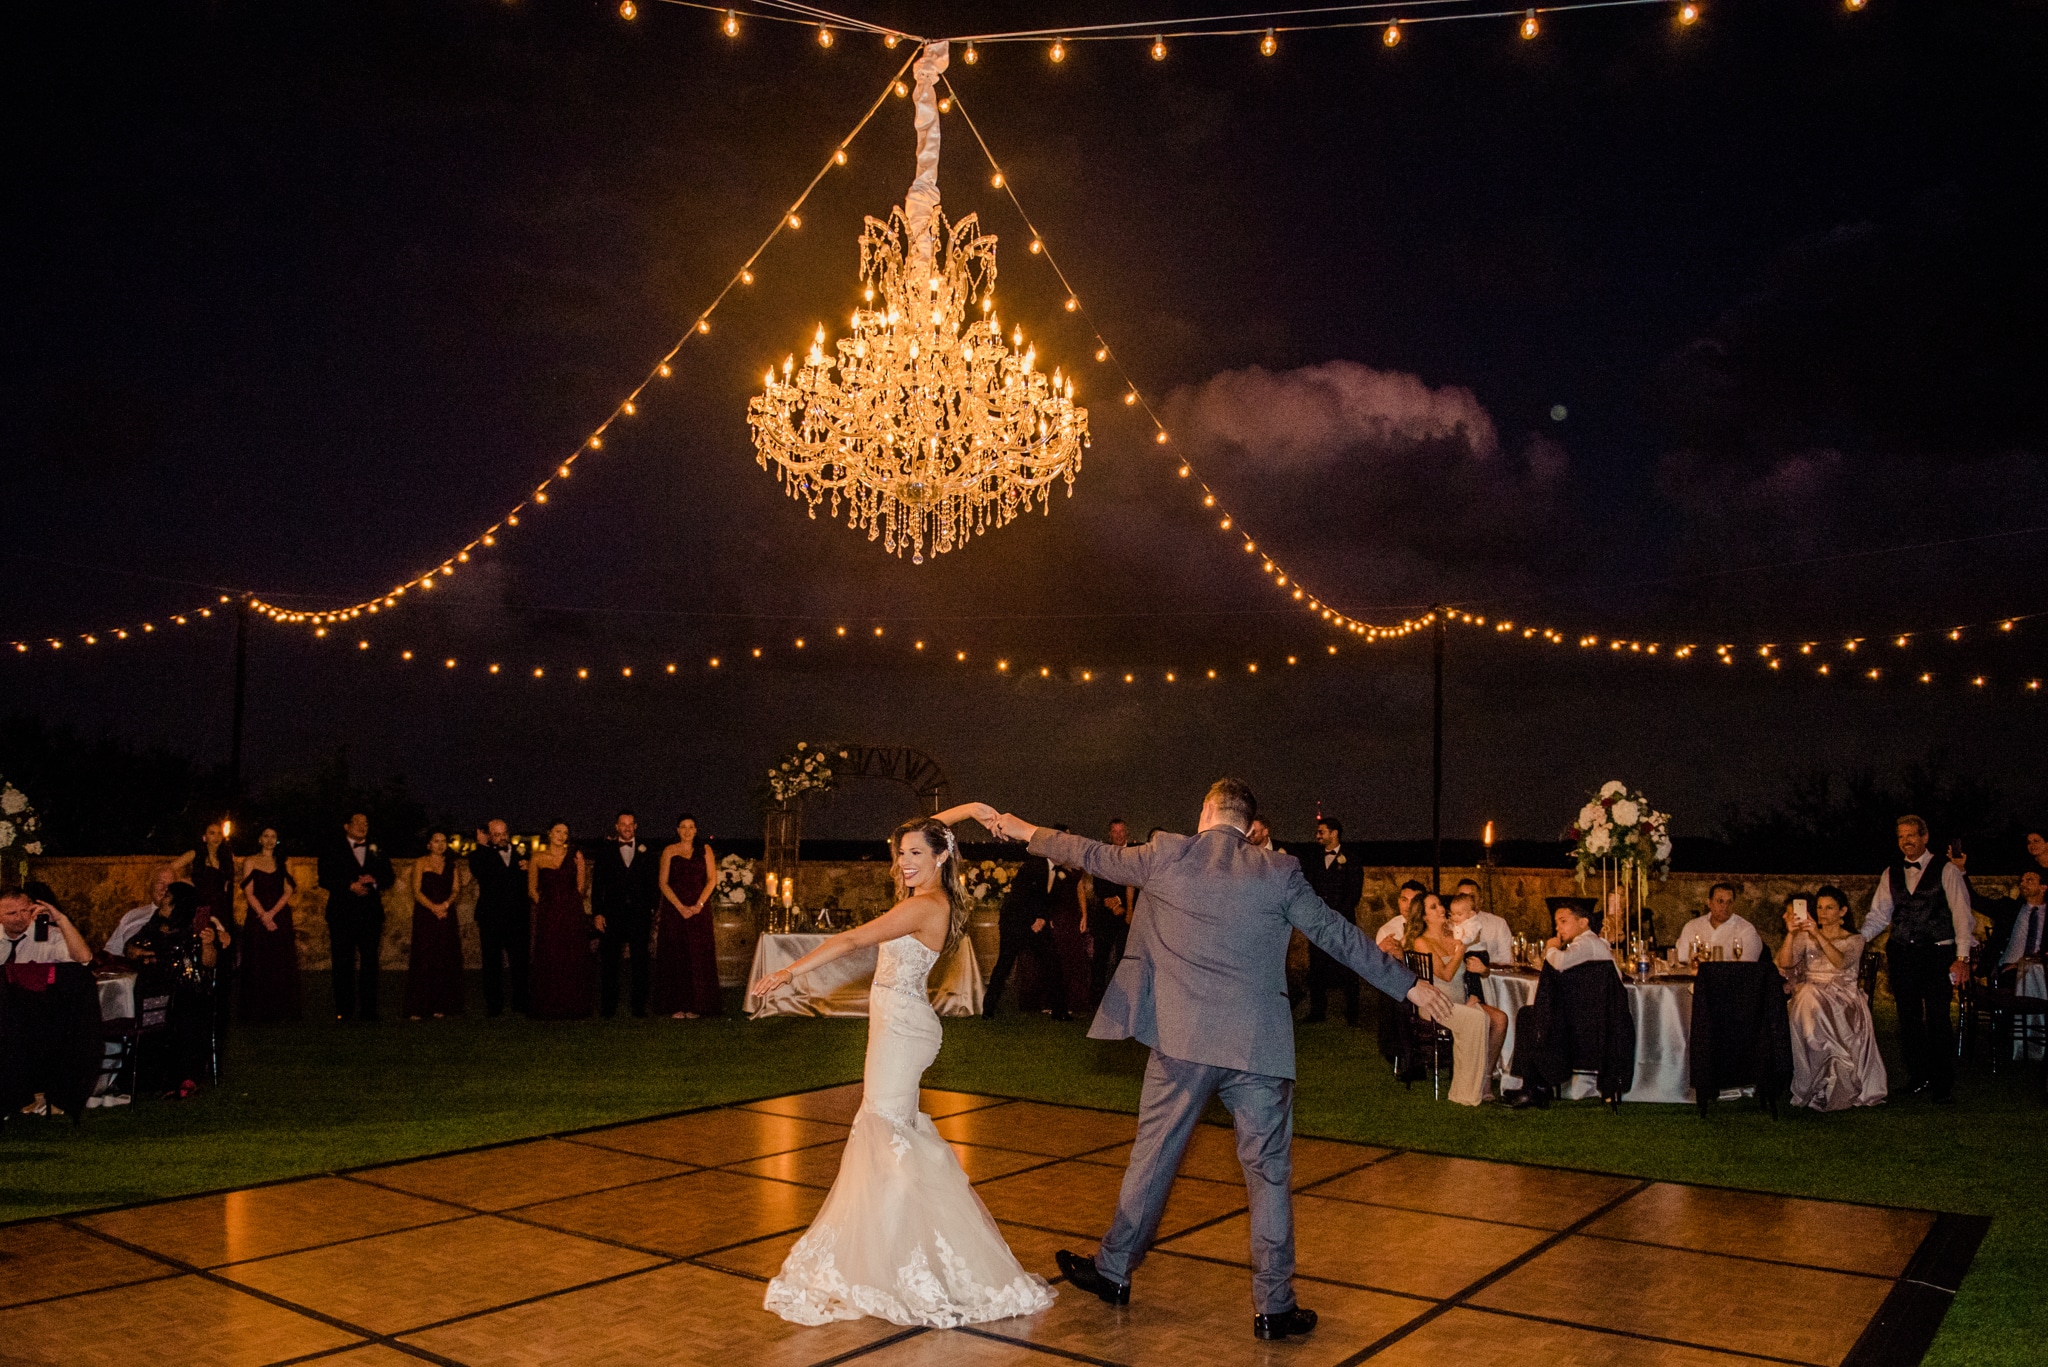 Bride & groom dancing under the lights and chandelier 